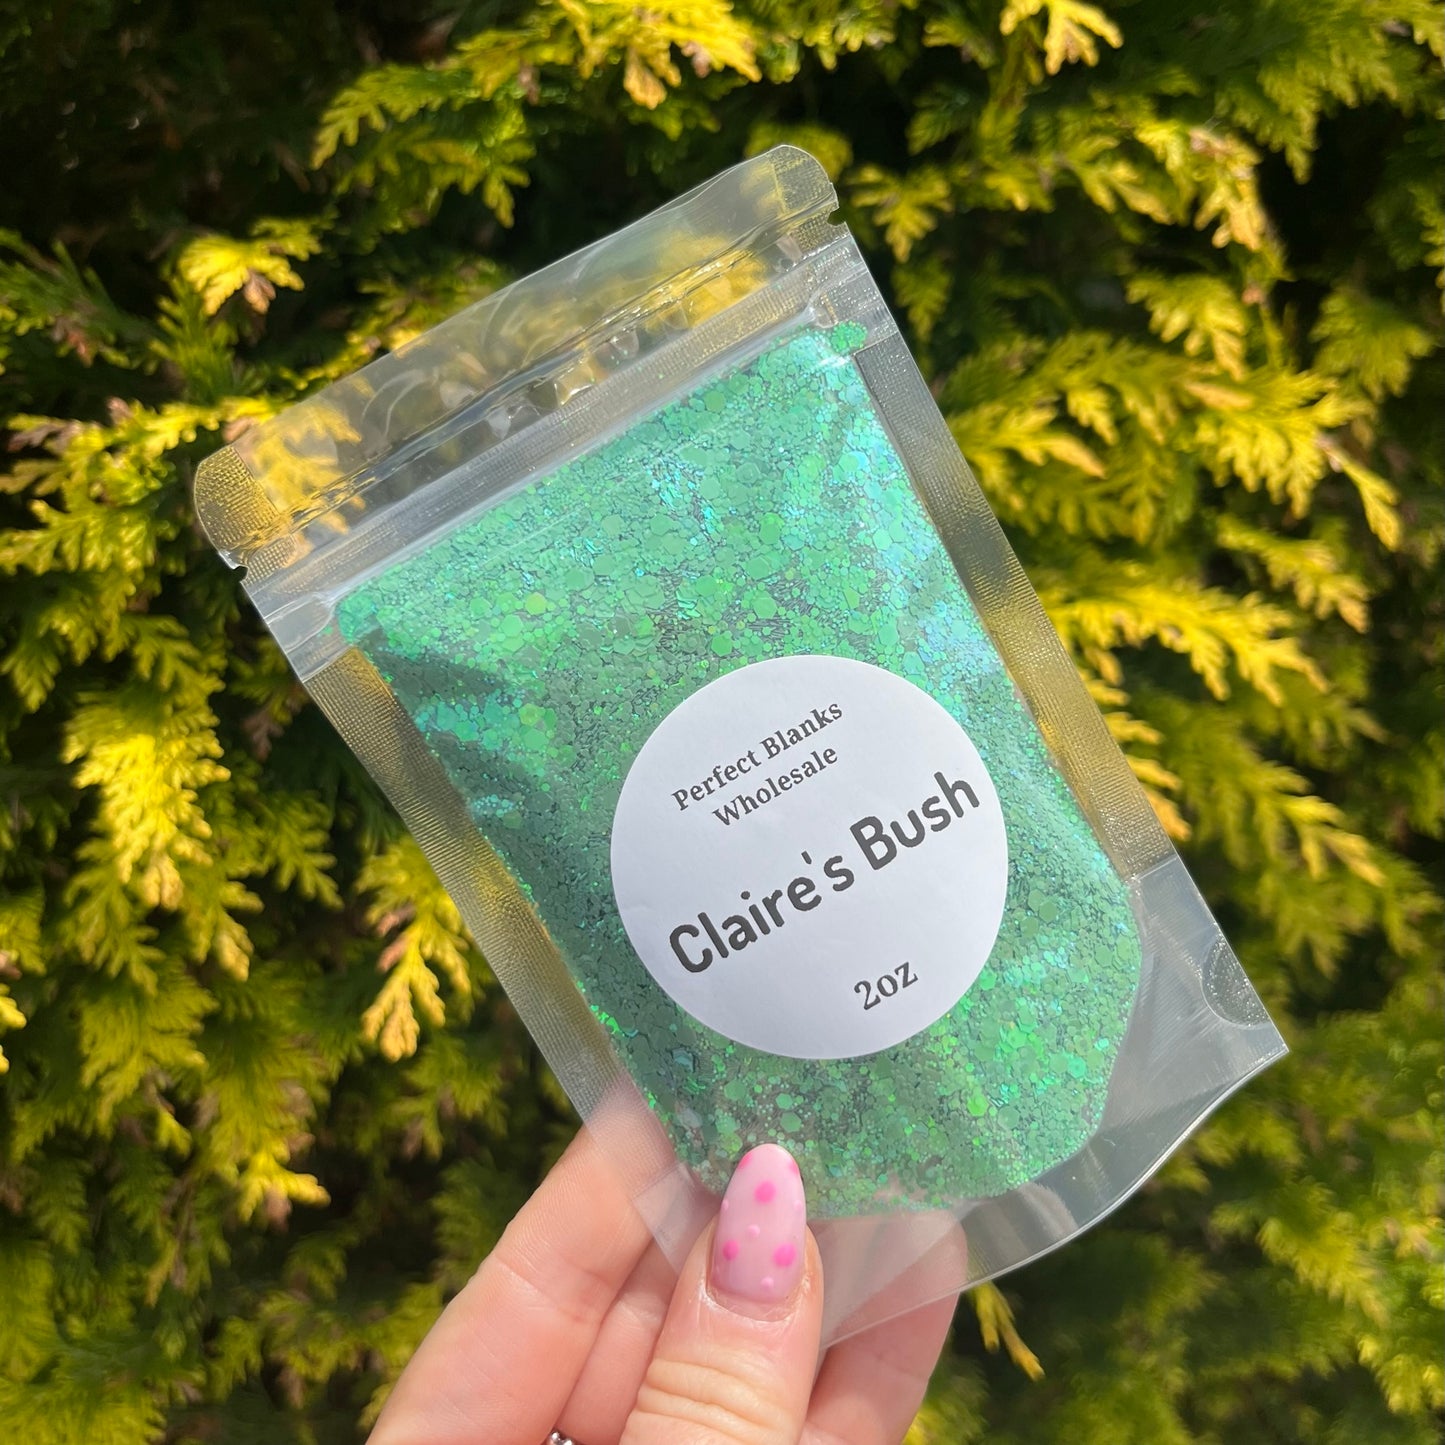 Claire's Bush - Chunky Glitter